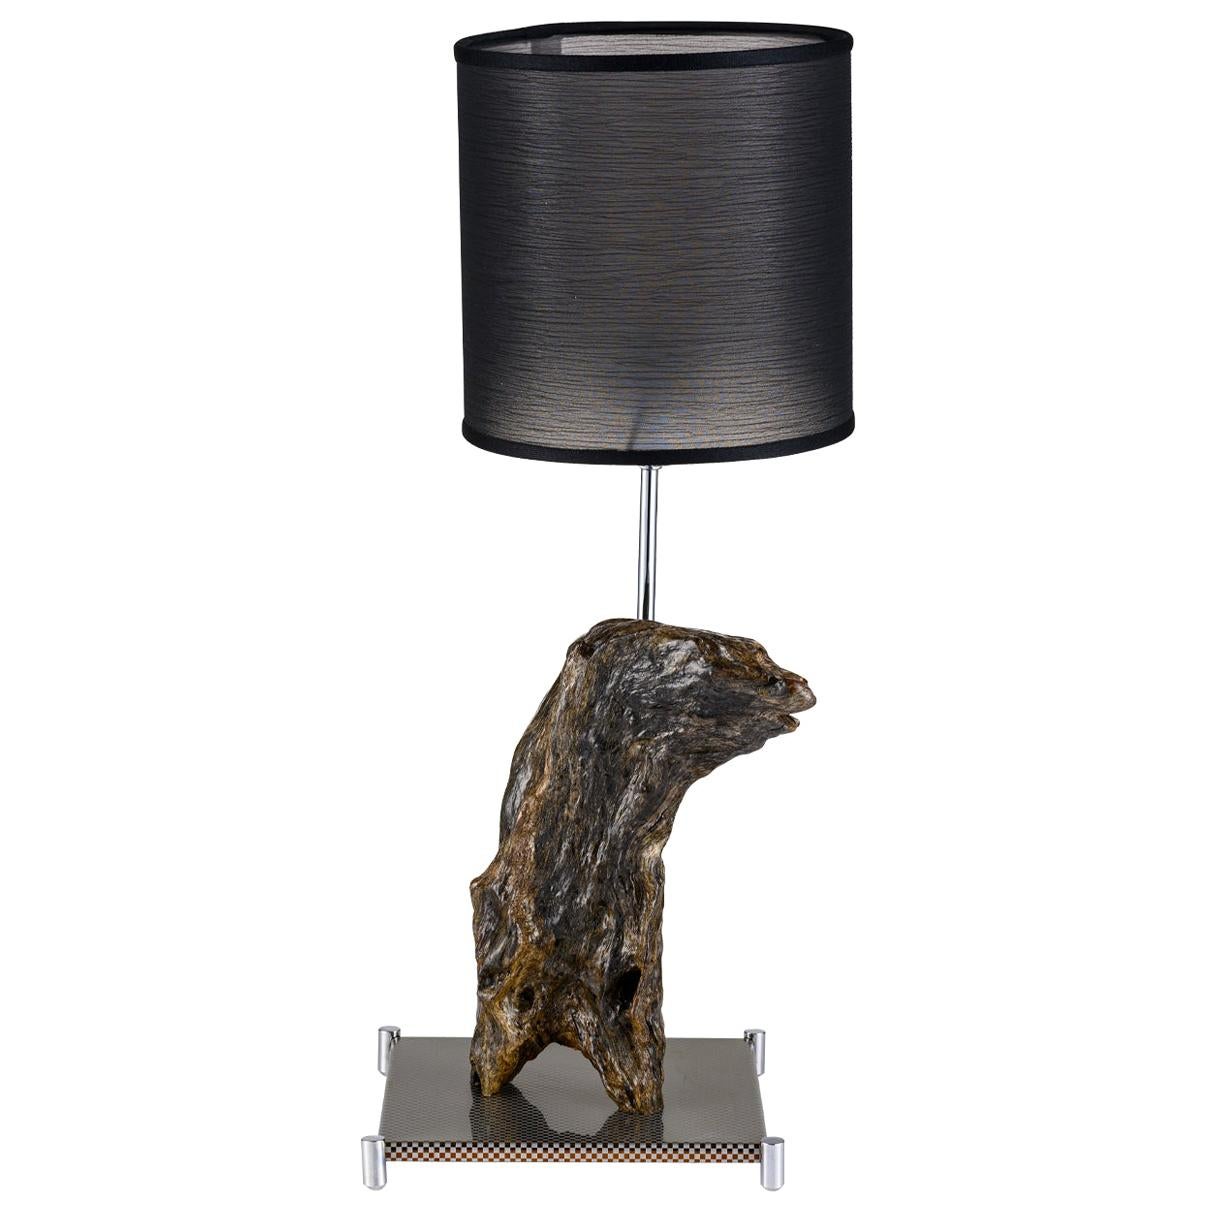 Castoro Table Lamp